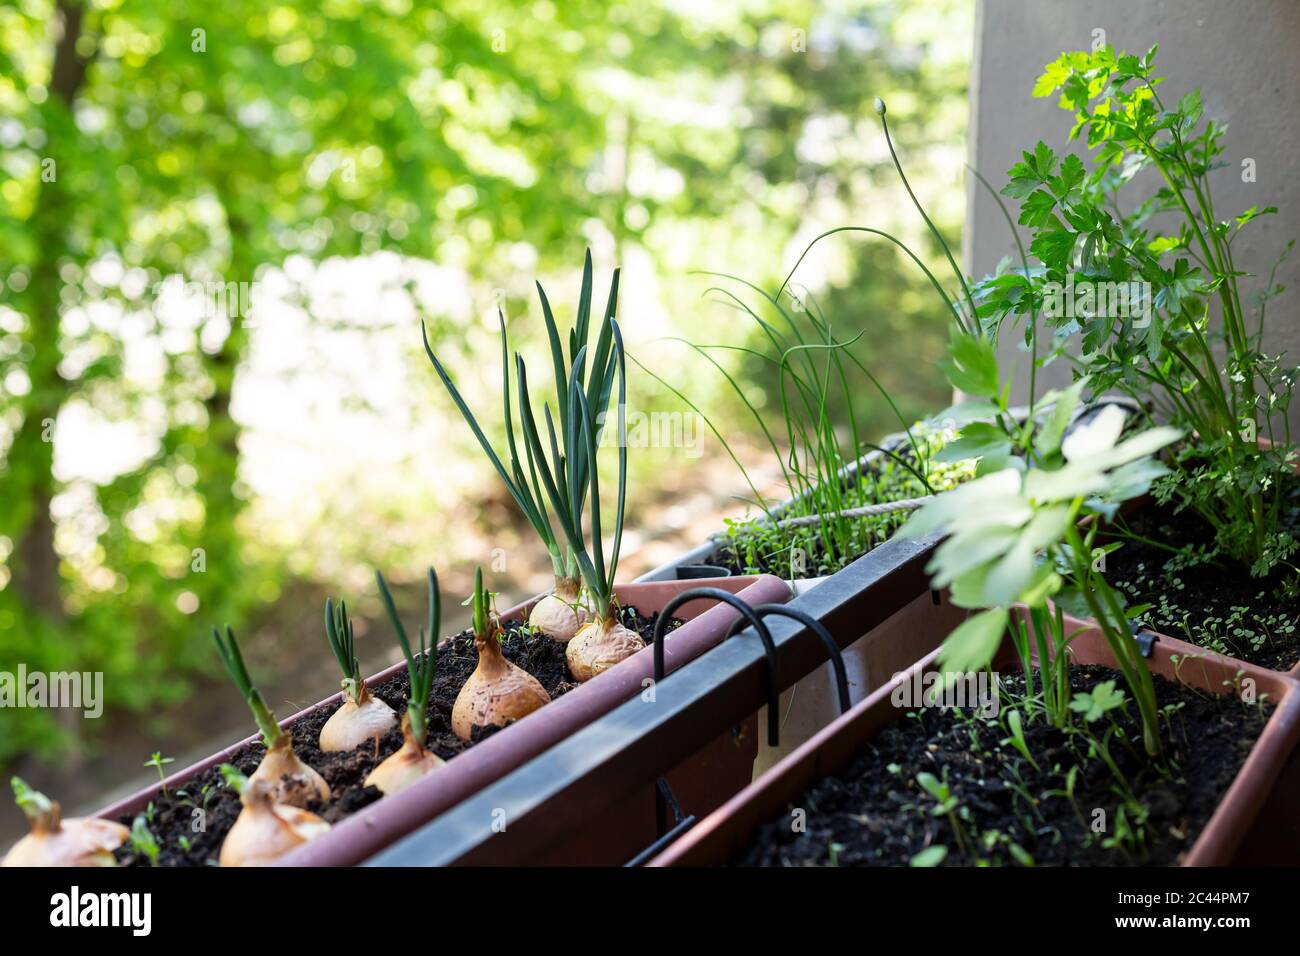 Welsh onions (Allium fistulosum) and various herbs growing in small balcony garden Stock Photo